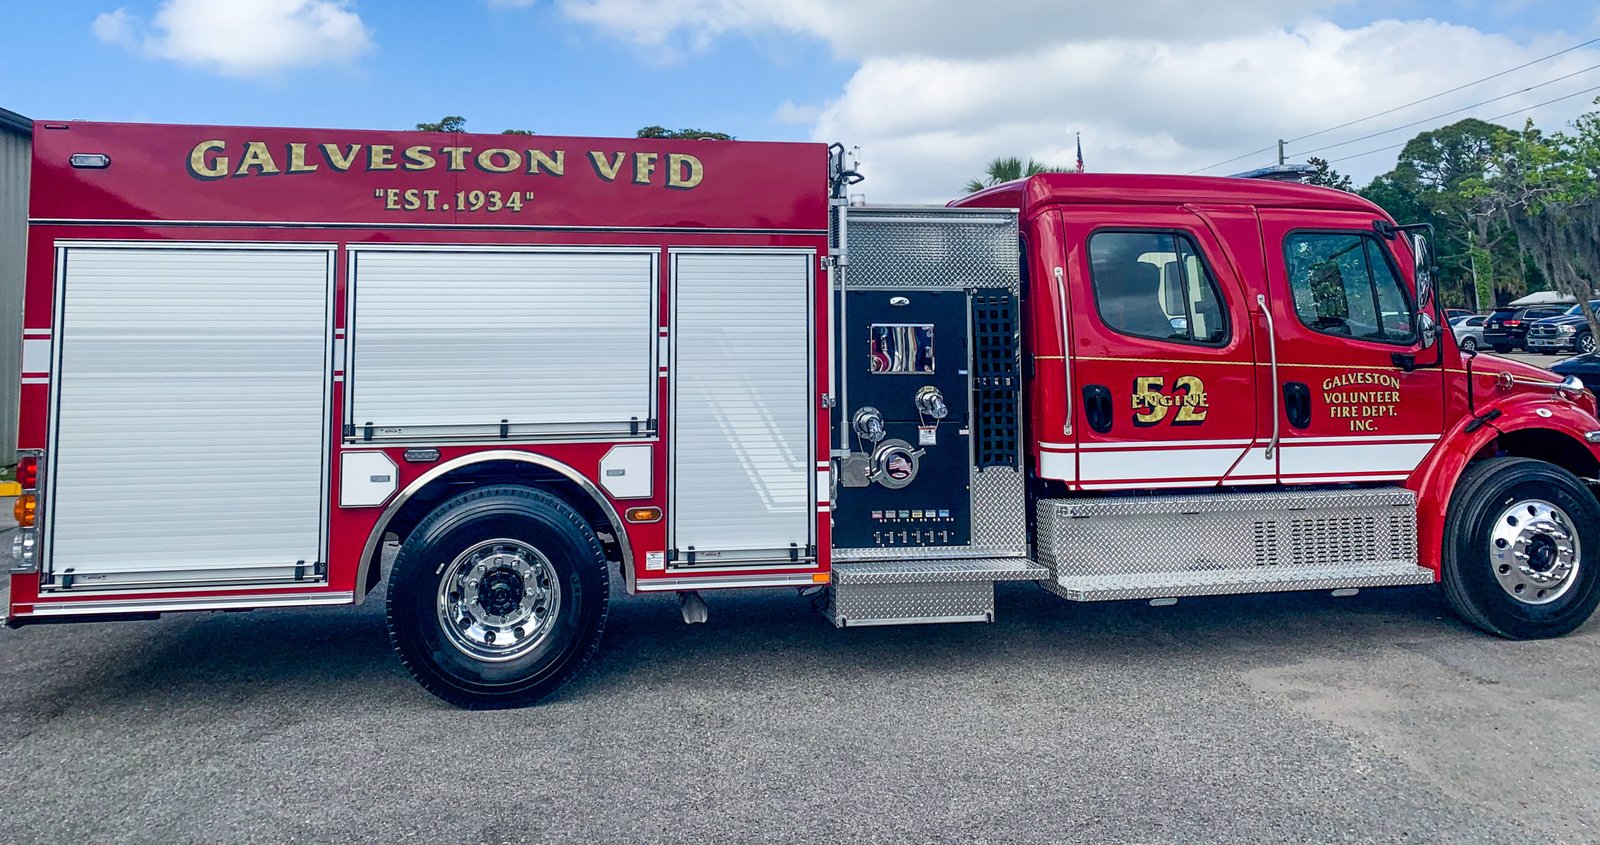 EM_galveston-volunteer-fire-department-pumper-35420